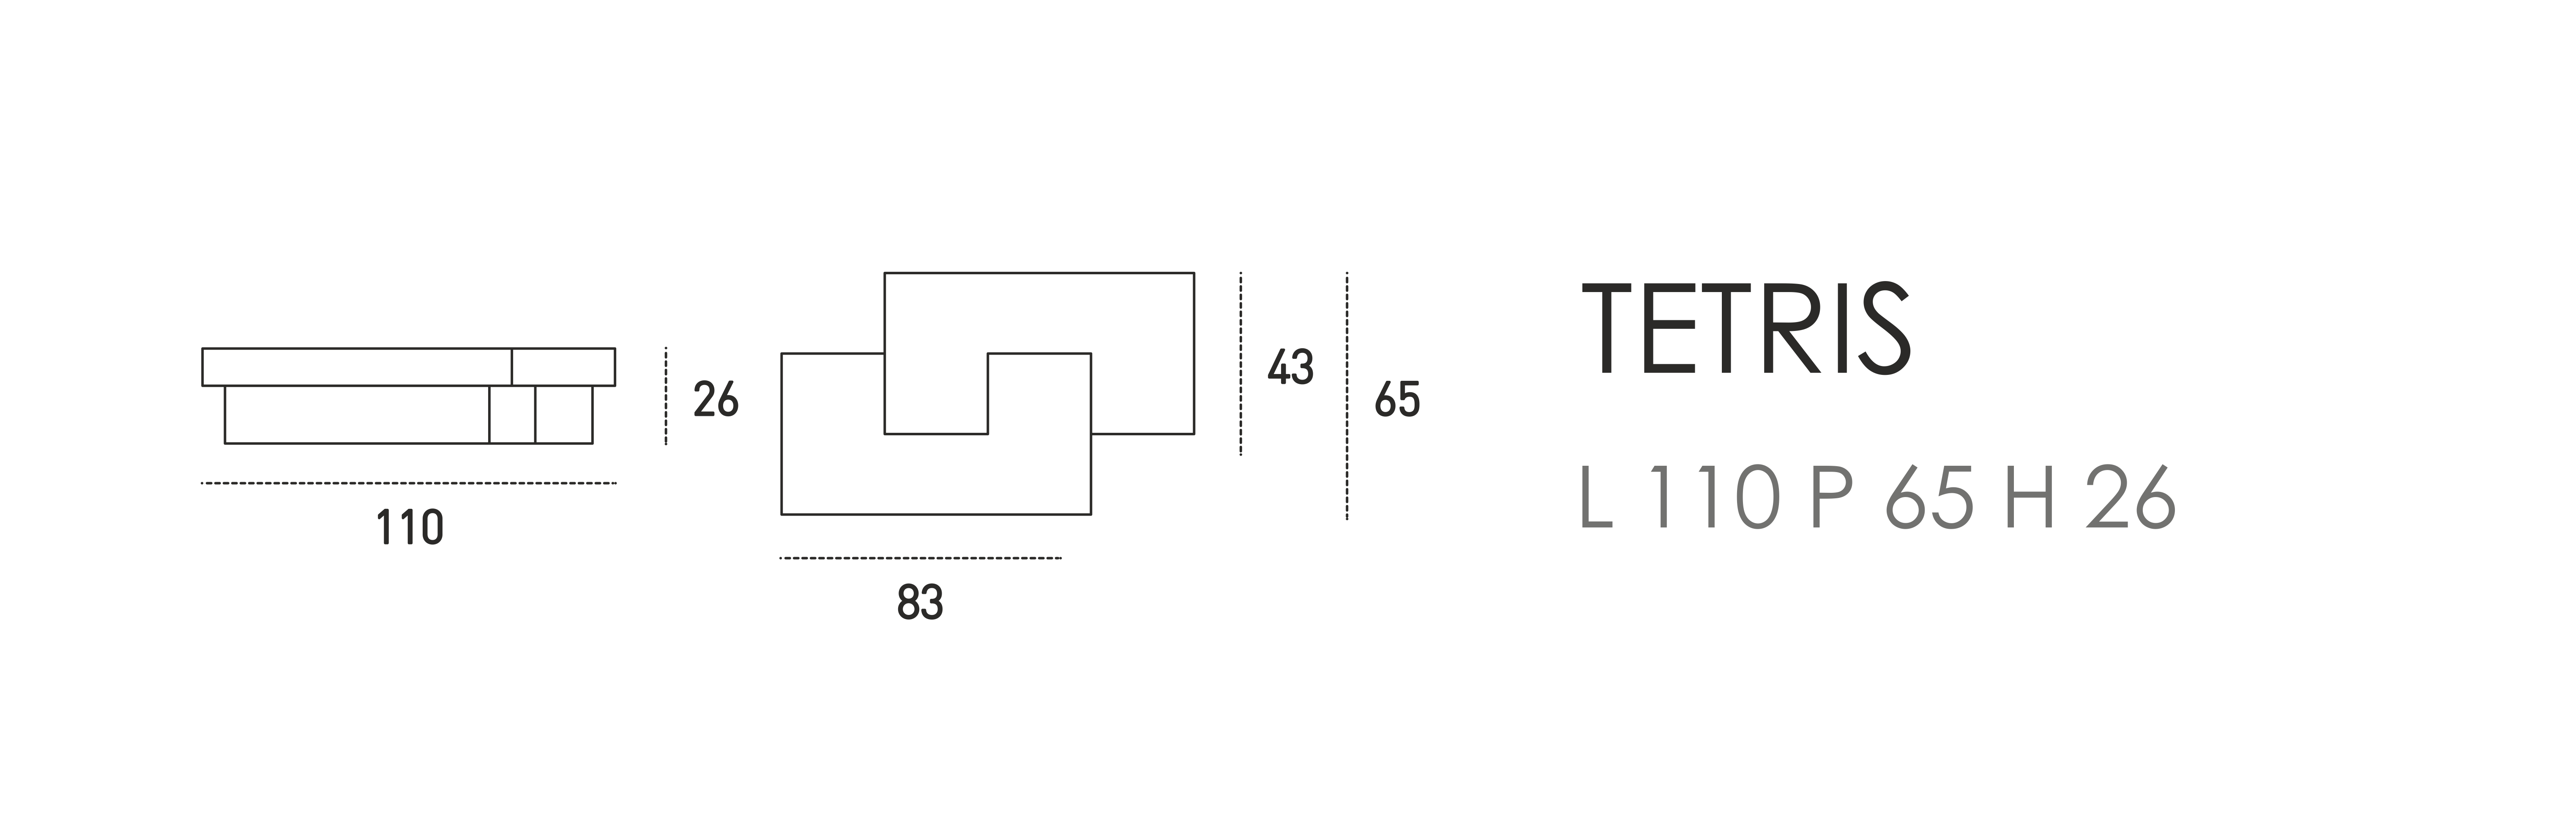 Tetris L 110 P 65 H 26